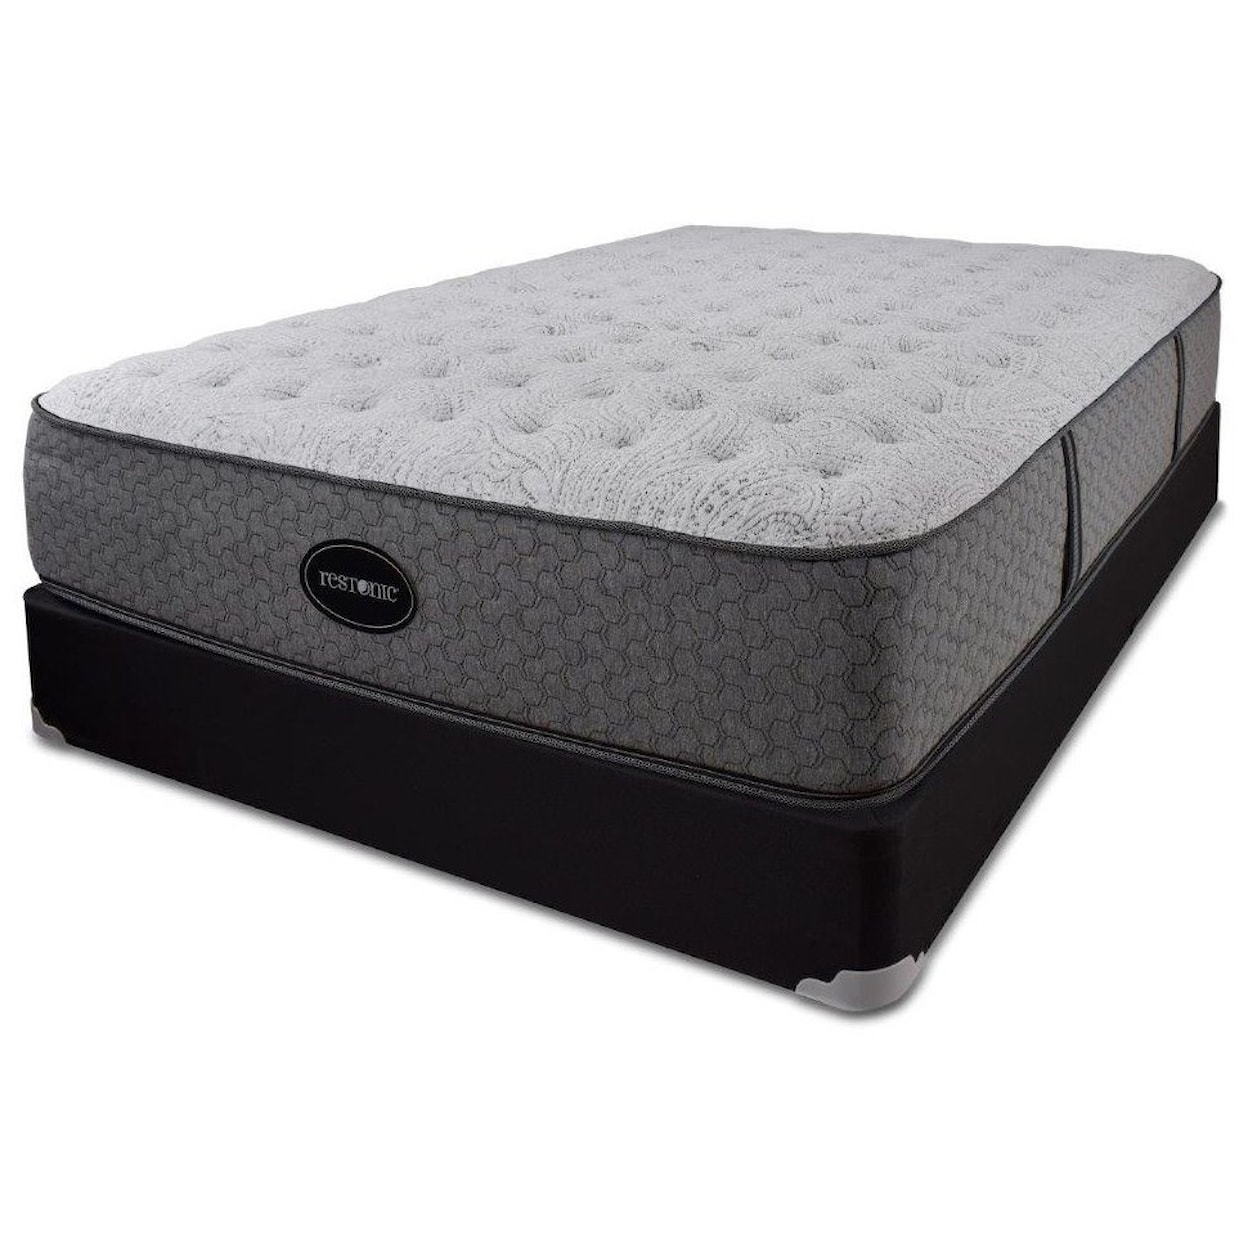 Restonic Blackcomb Cushion Firm Full Comfort Firm Mattress Set